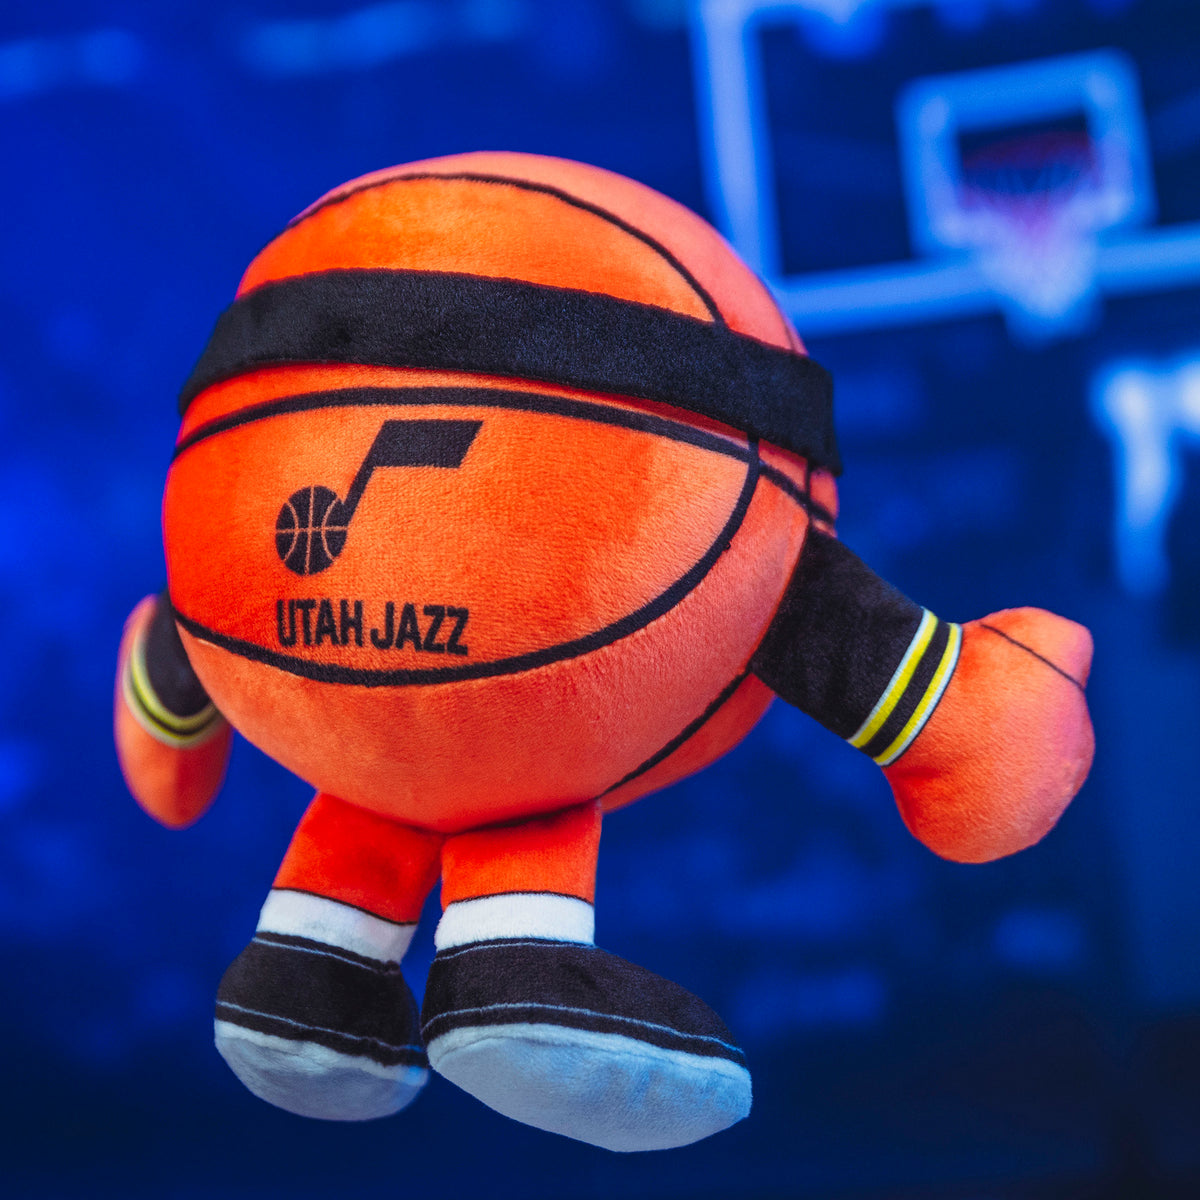 Utah Jazz 8&quot; Kuricha Basketball Plush